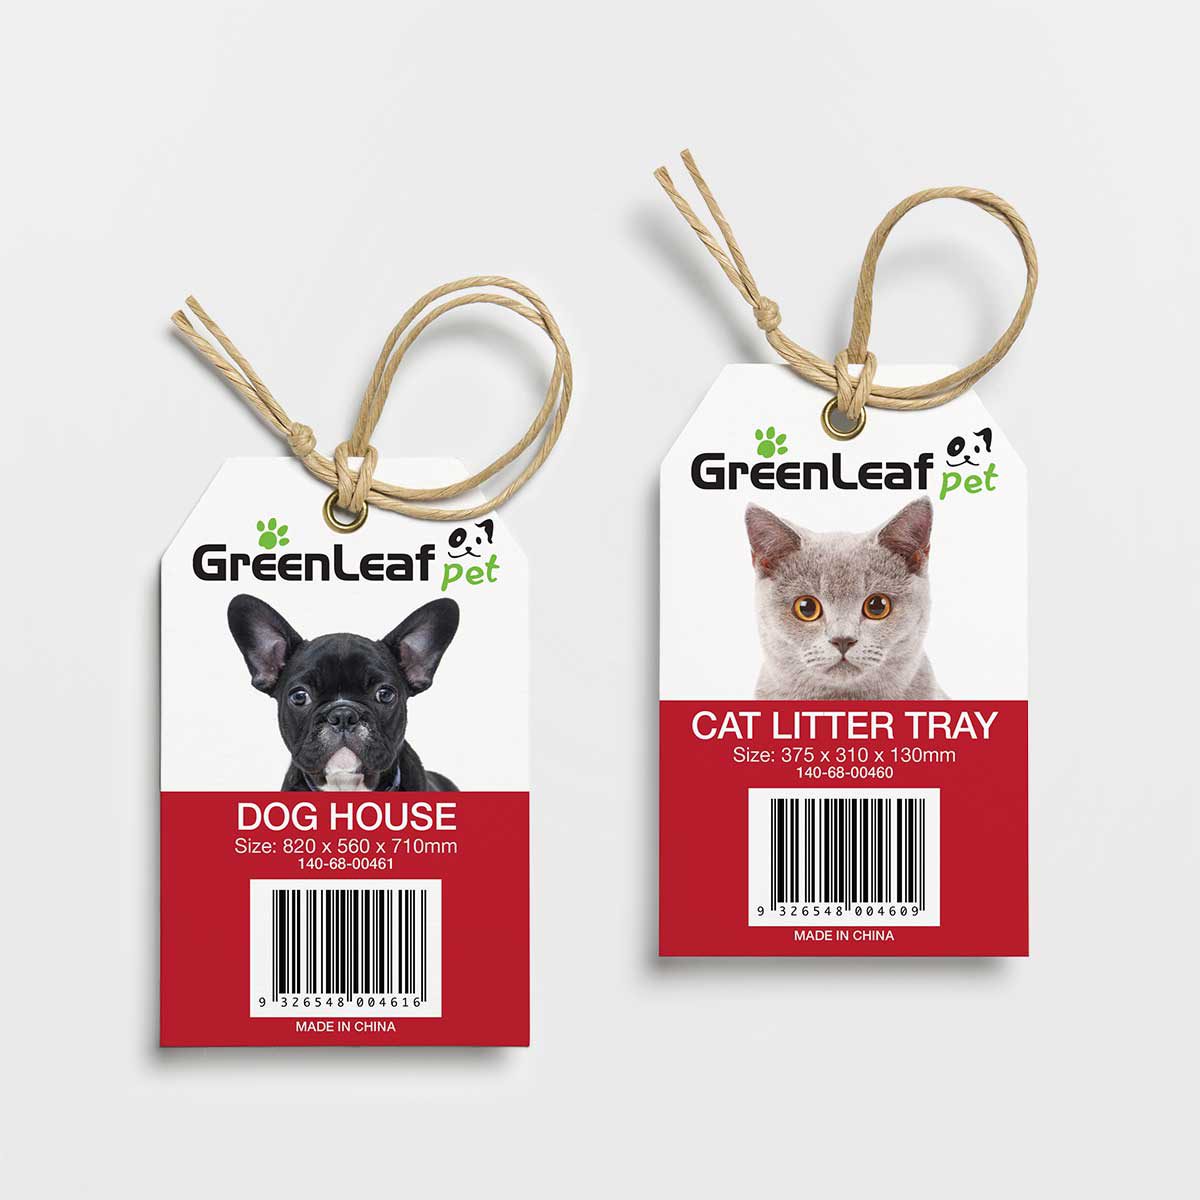 Greenleaf Pets tags designed by Linda Butler of GGA Graphics